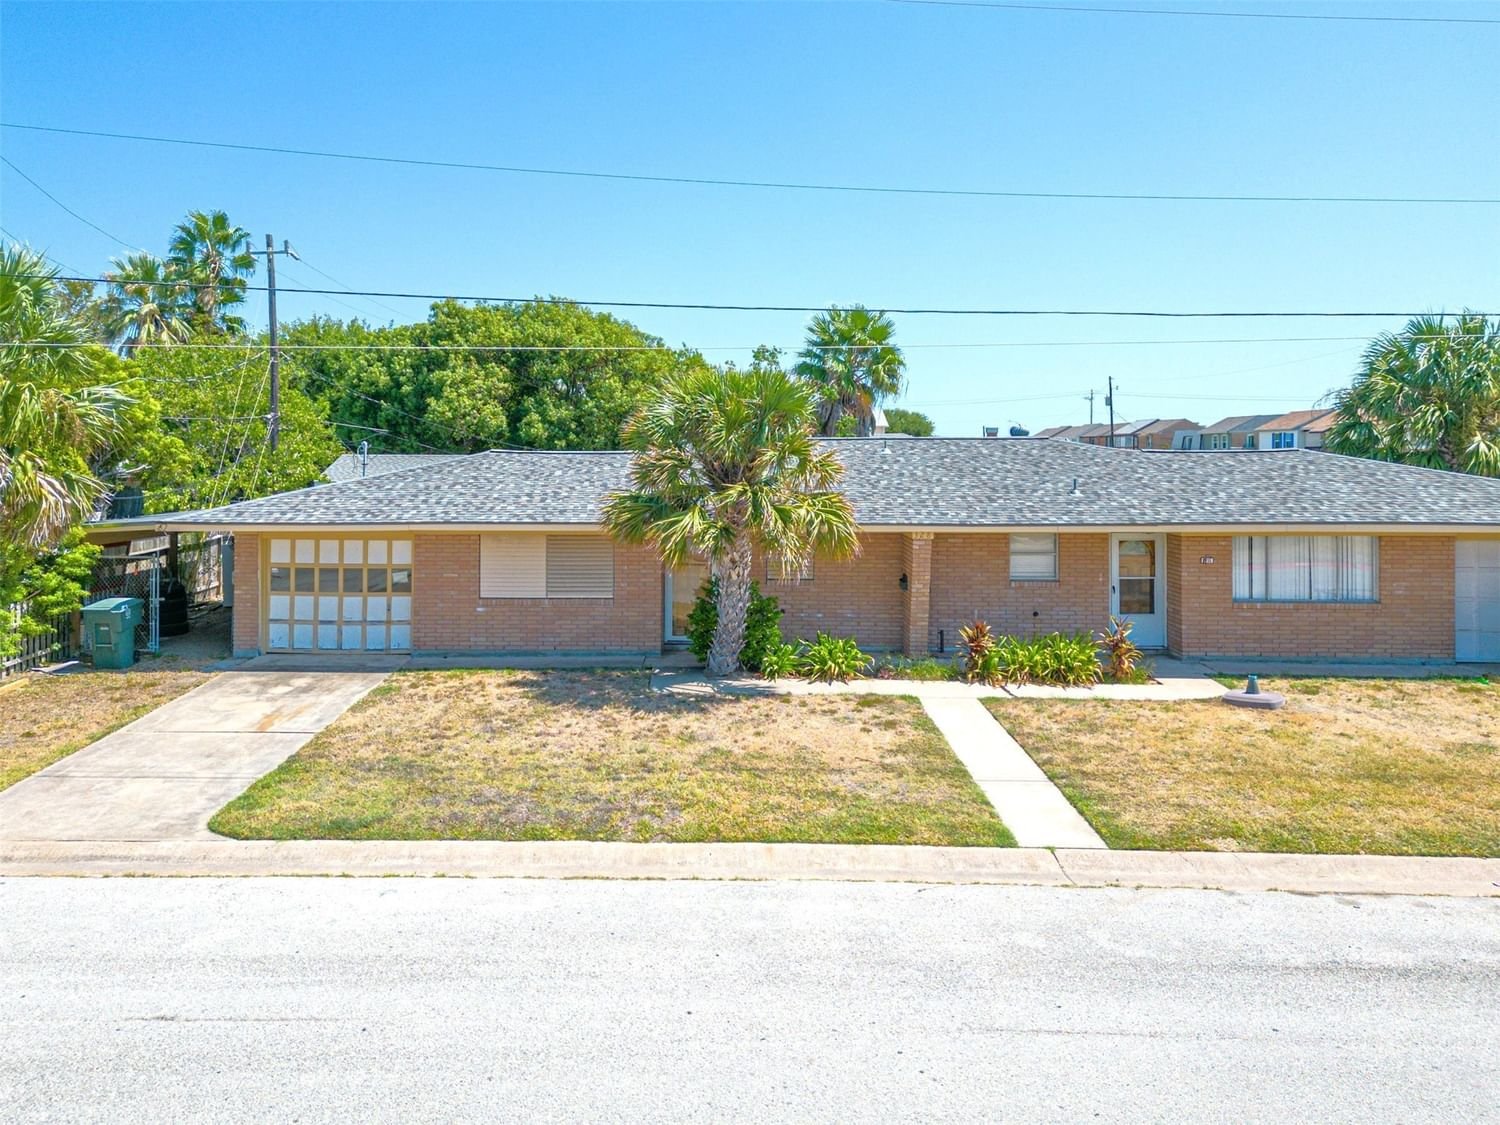 Real estate property located at 328 1st, Galveston, San Marino Sub, Galveston, TX, US